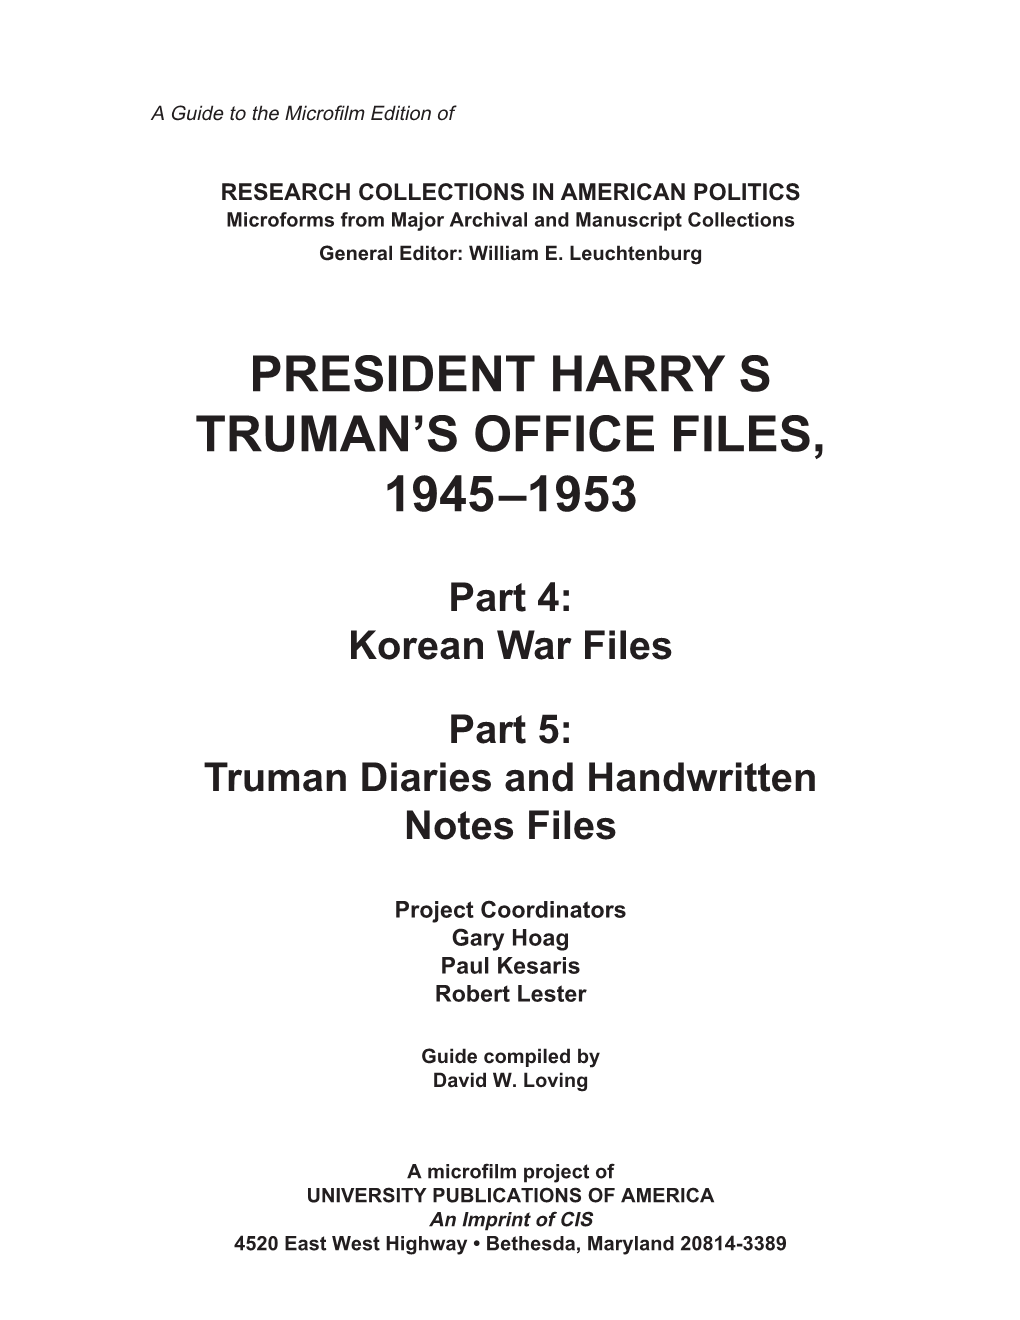 President Harry S Truman's Office Files, 1945